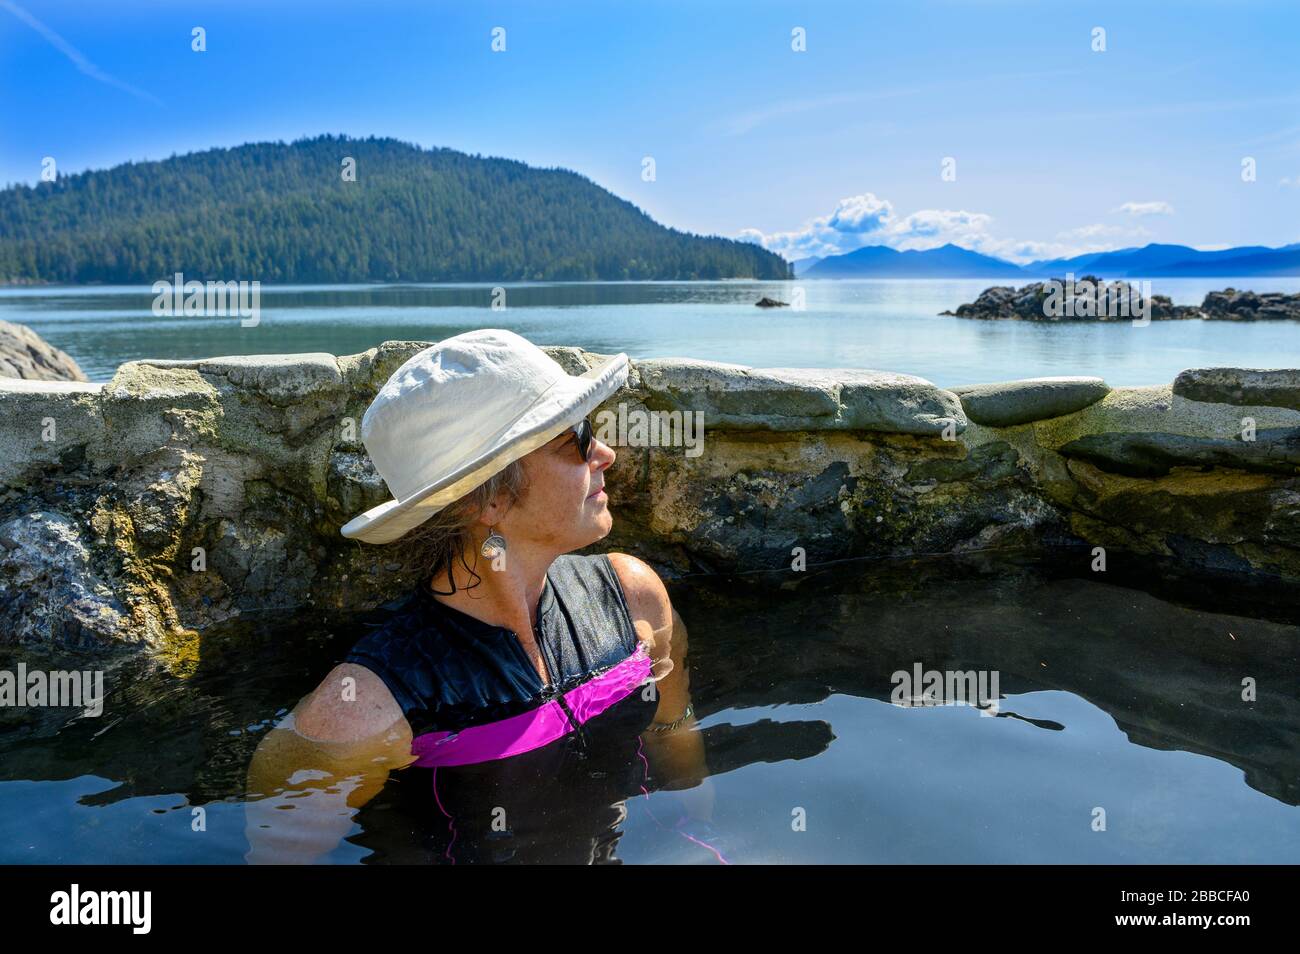 Visitatori all'Hot Springs Island, Gandll K'in Gwaay.yaay, Gwaii Haanas National Park Reserve, Haida Gwaii, precedentemente conosciuto come Queen Charlotte Islands, British Columbia, Canada Foto Stock